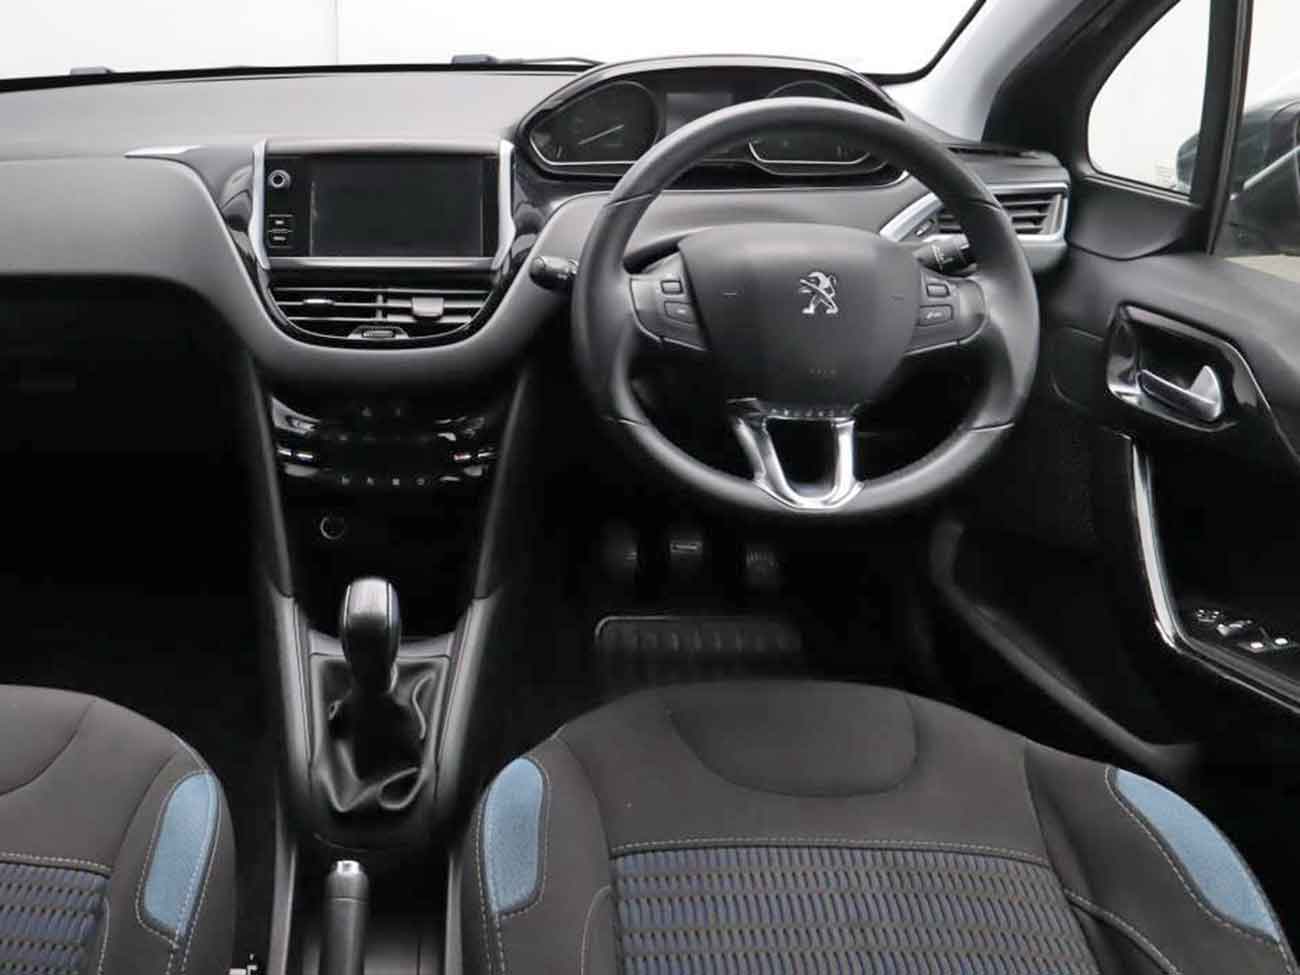 Interior view of Peugeot 208